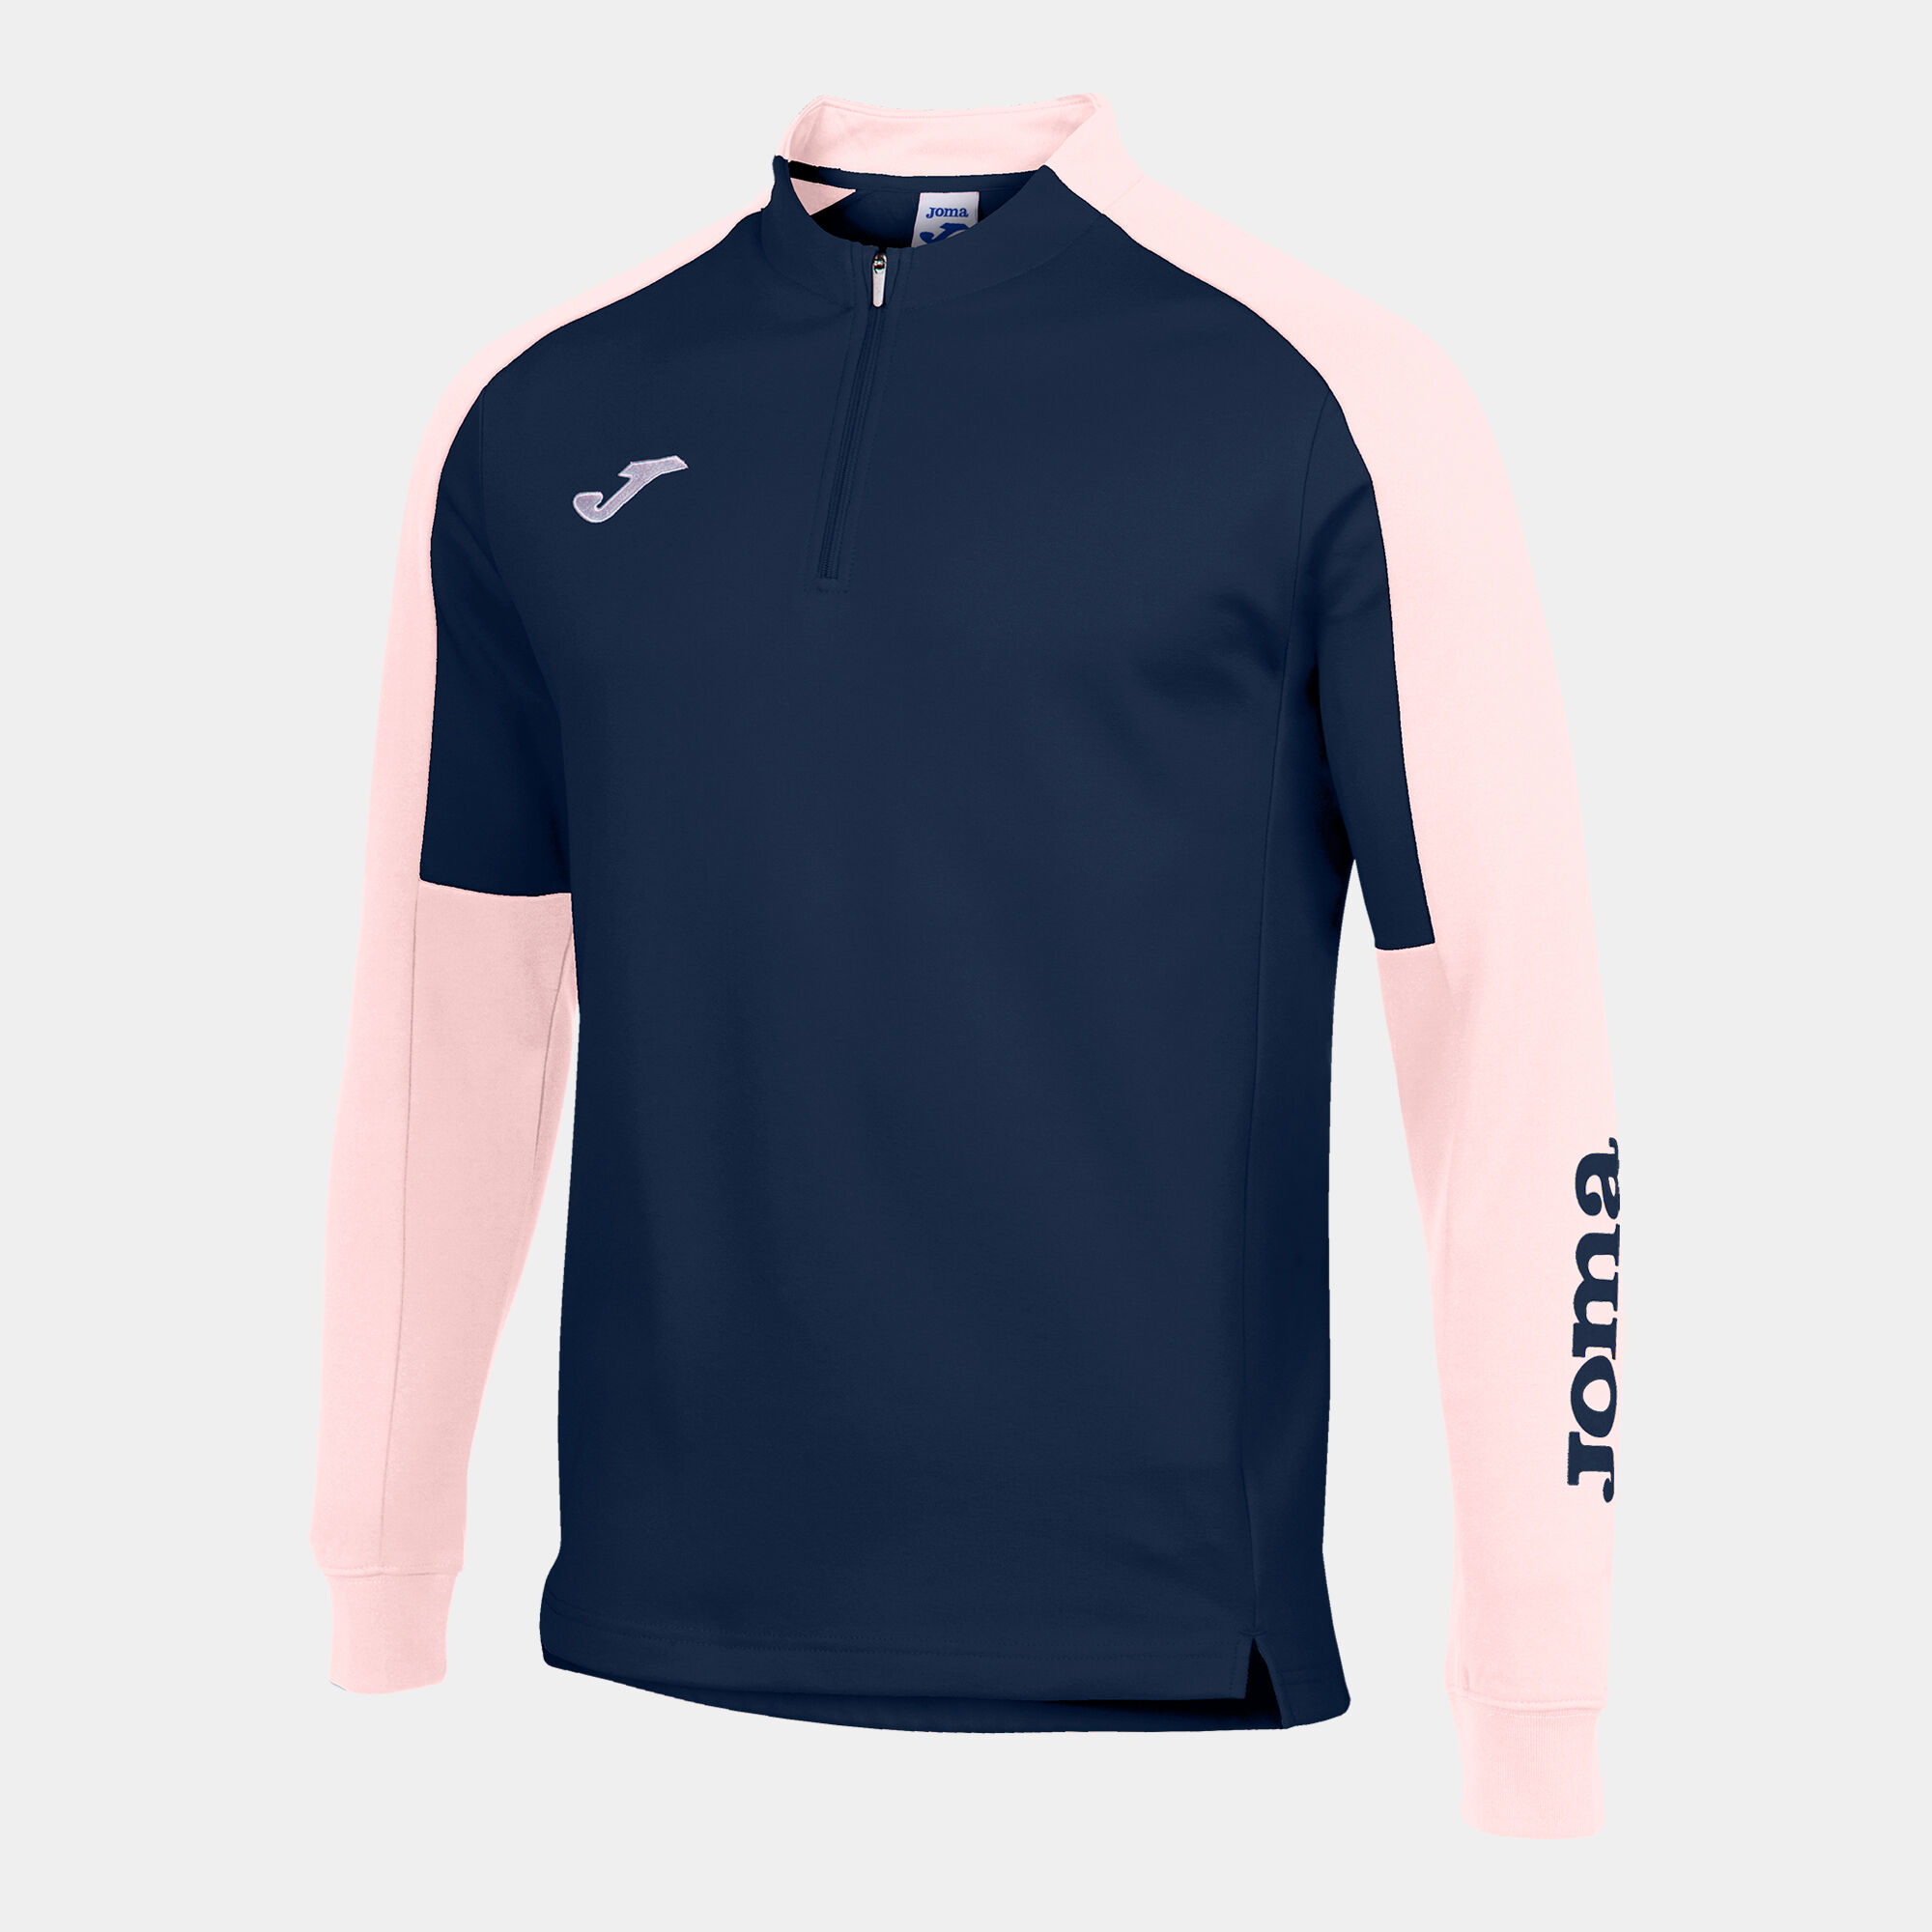 Sweatshirt man Eco Championship navy blue pink